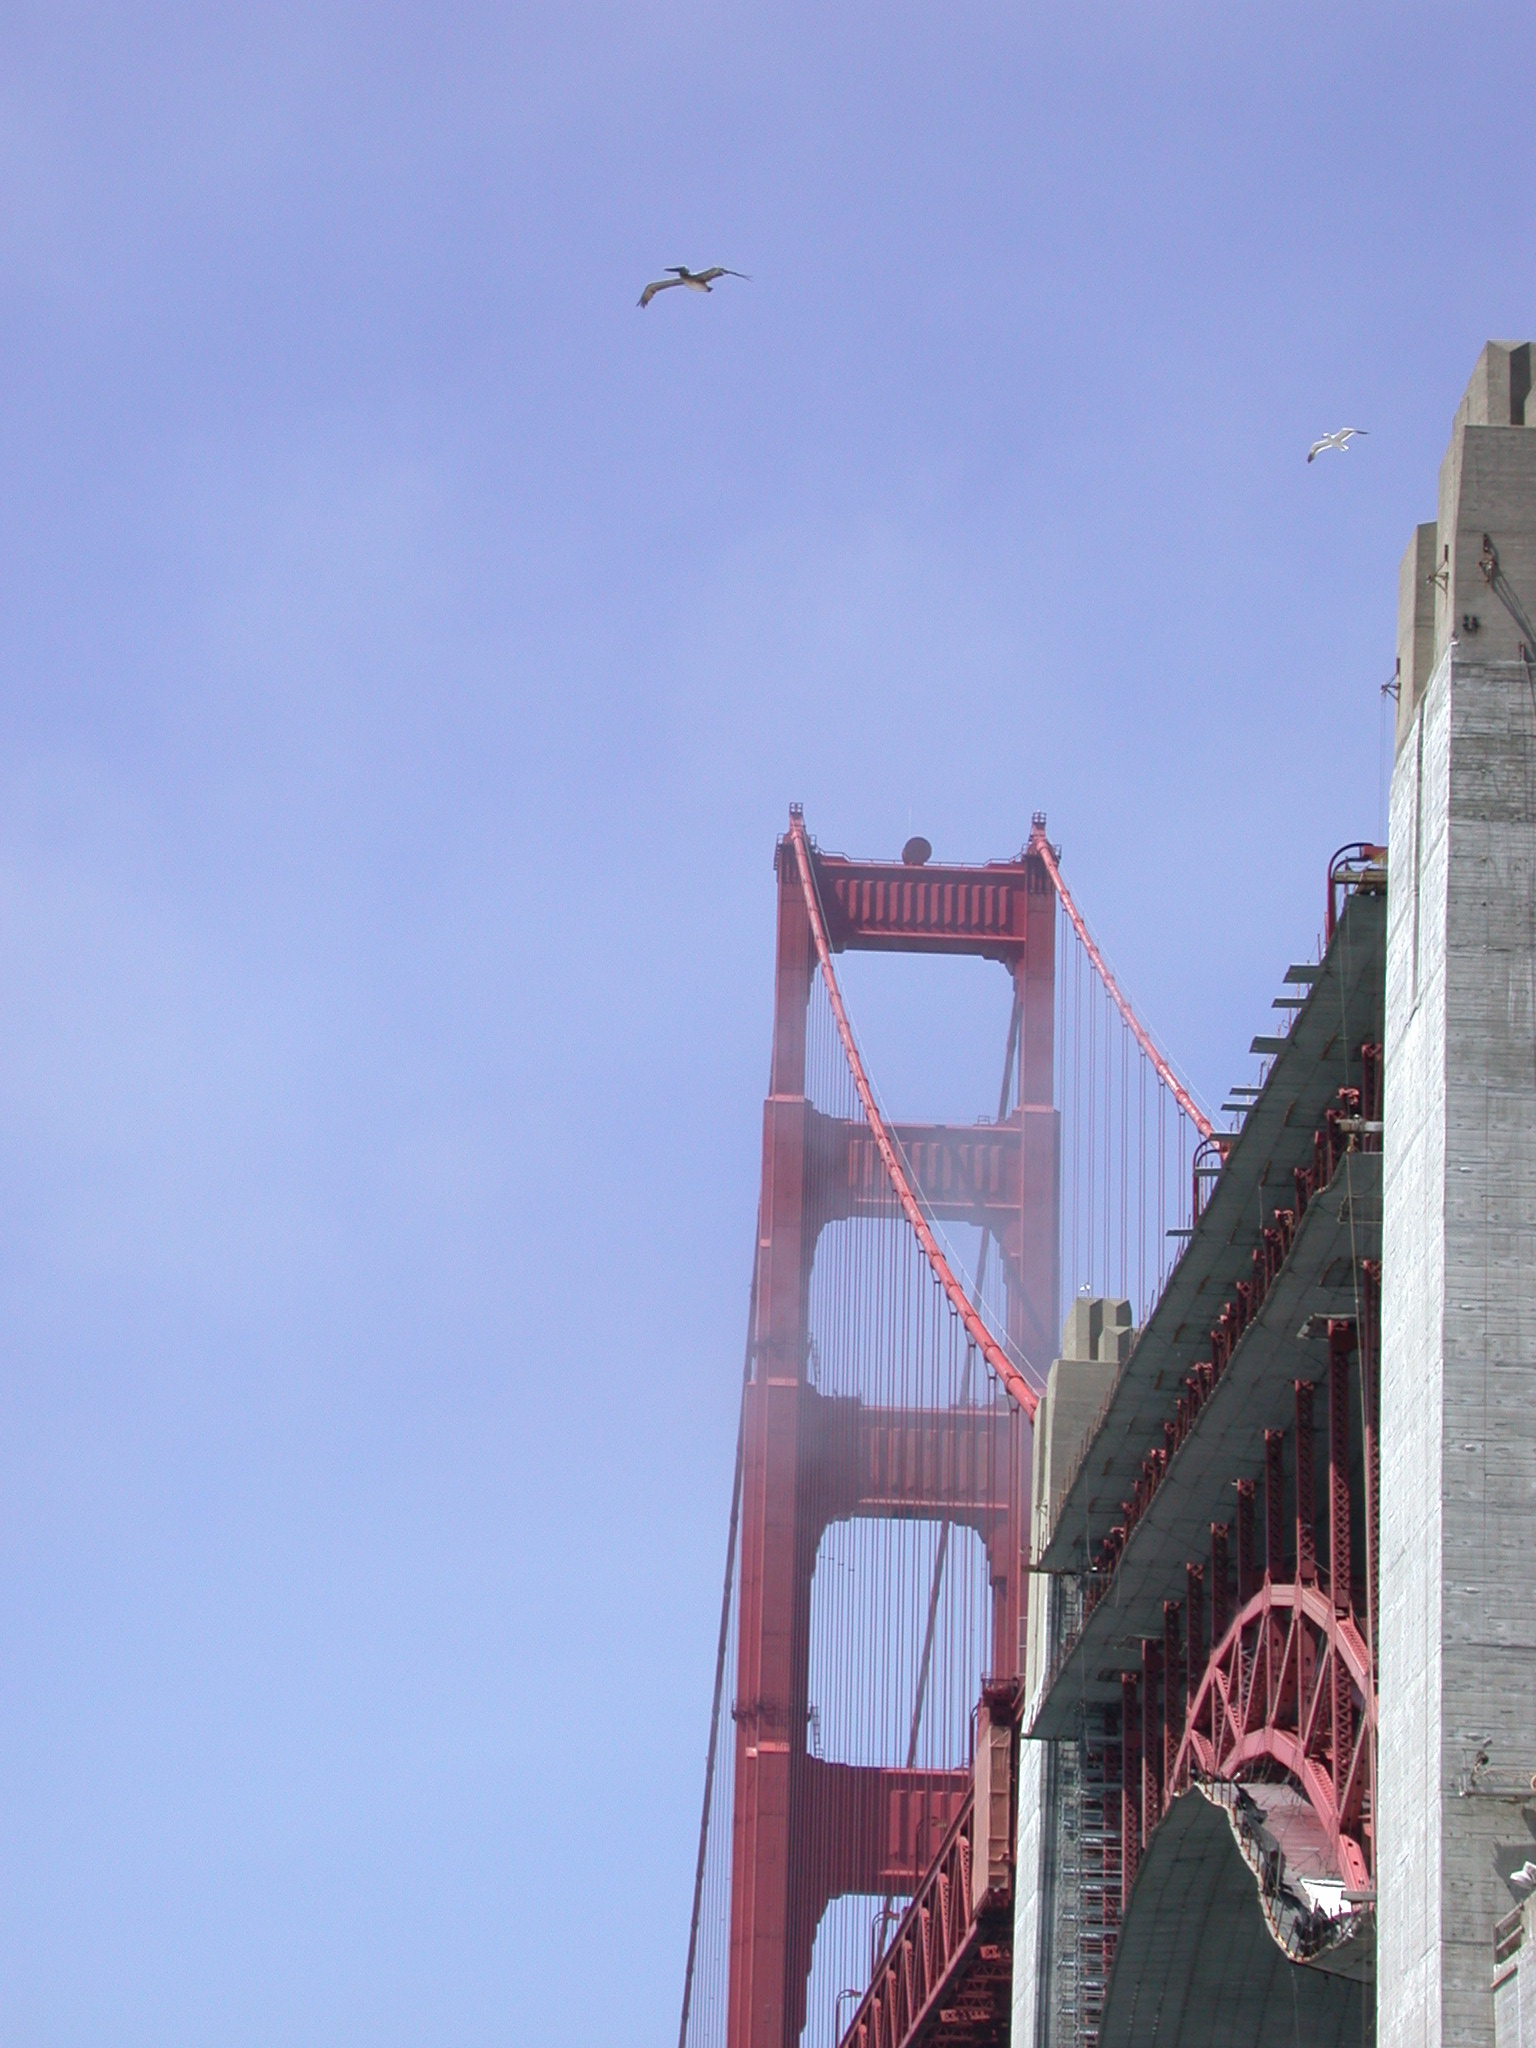 Pelicans by Golden Gate Bridge